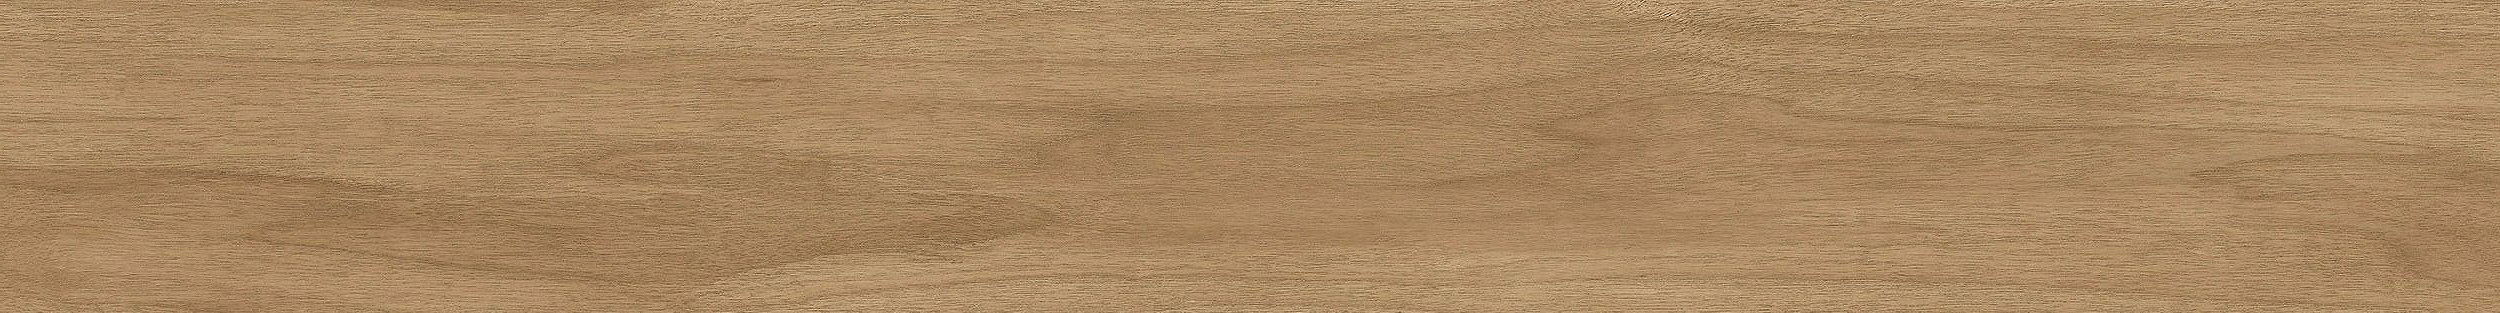 Criterion Classic Woodgrains LVT In Washed Maple imagen número 5